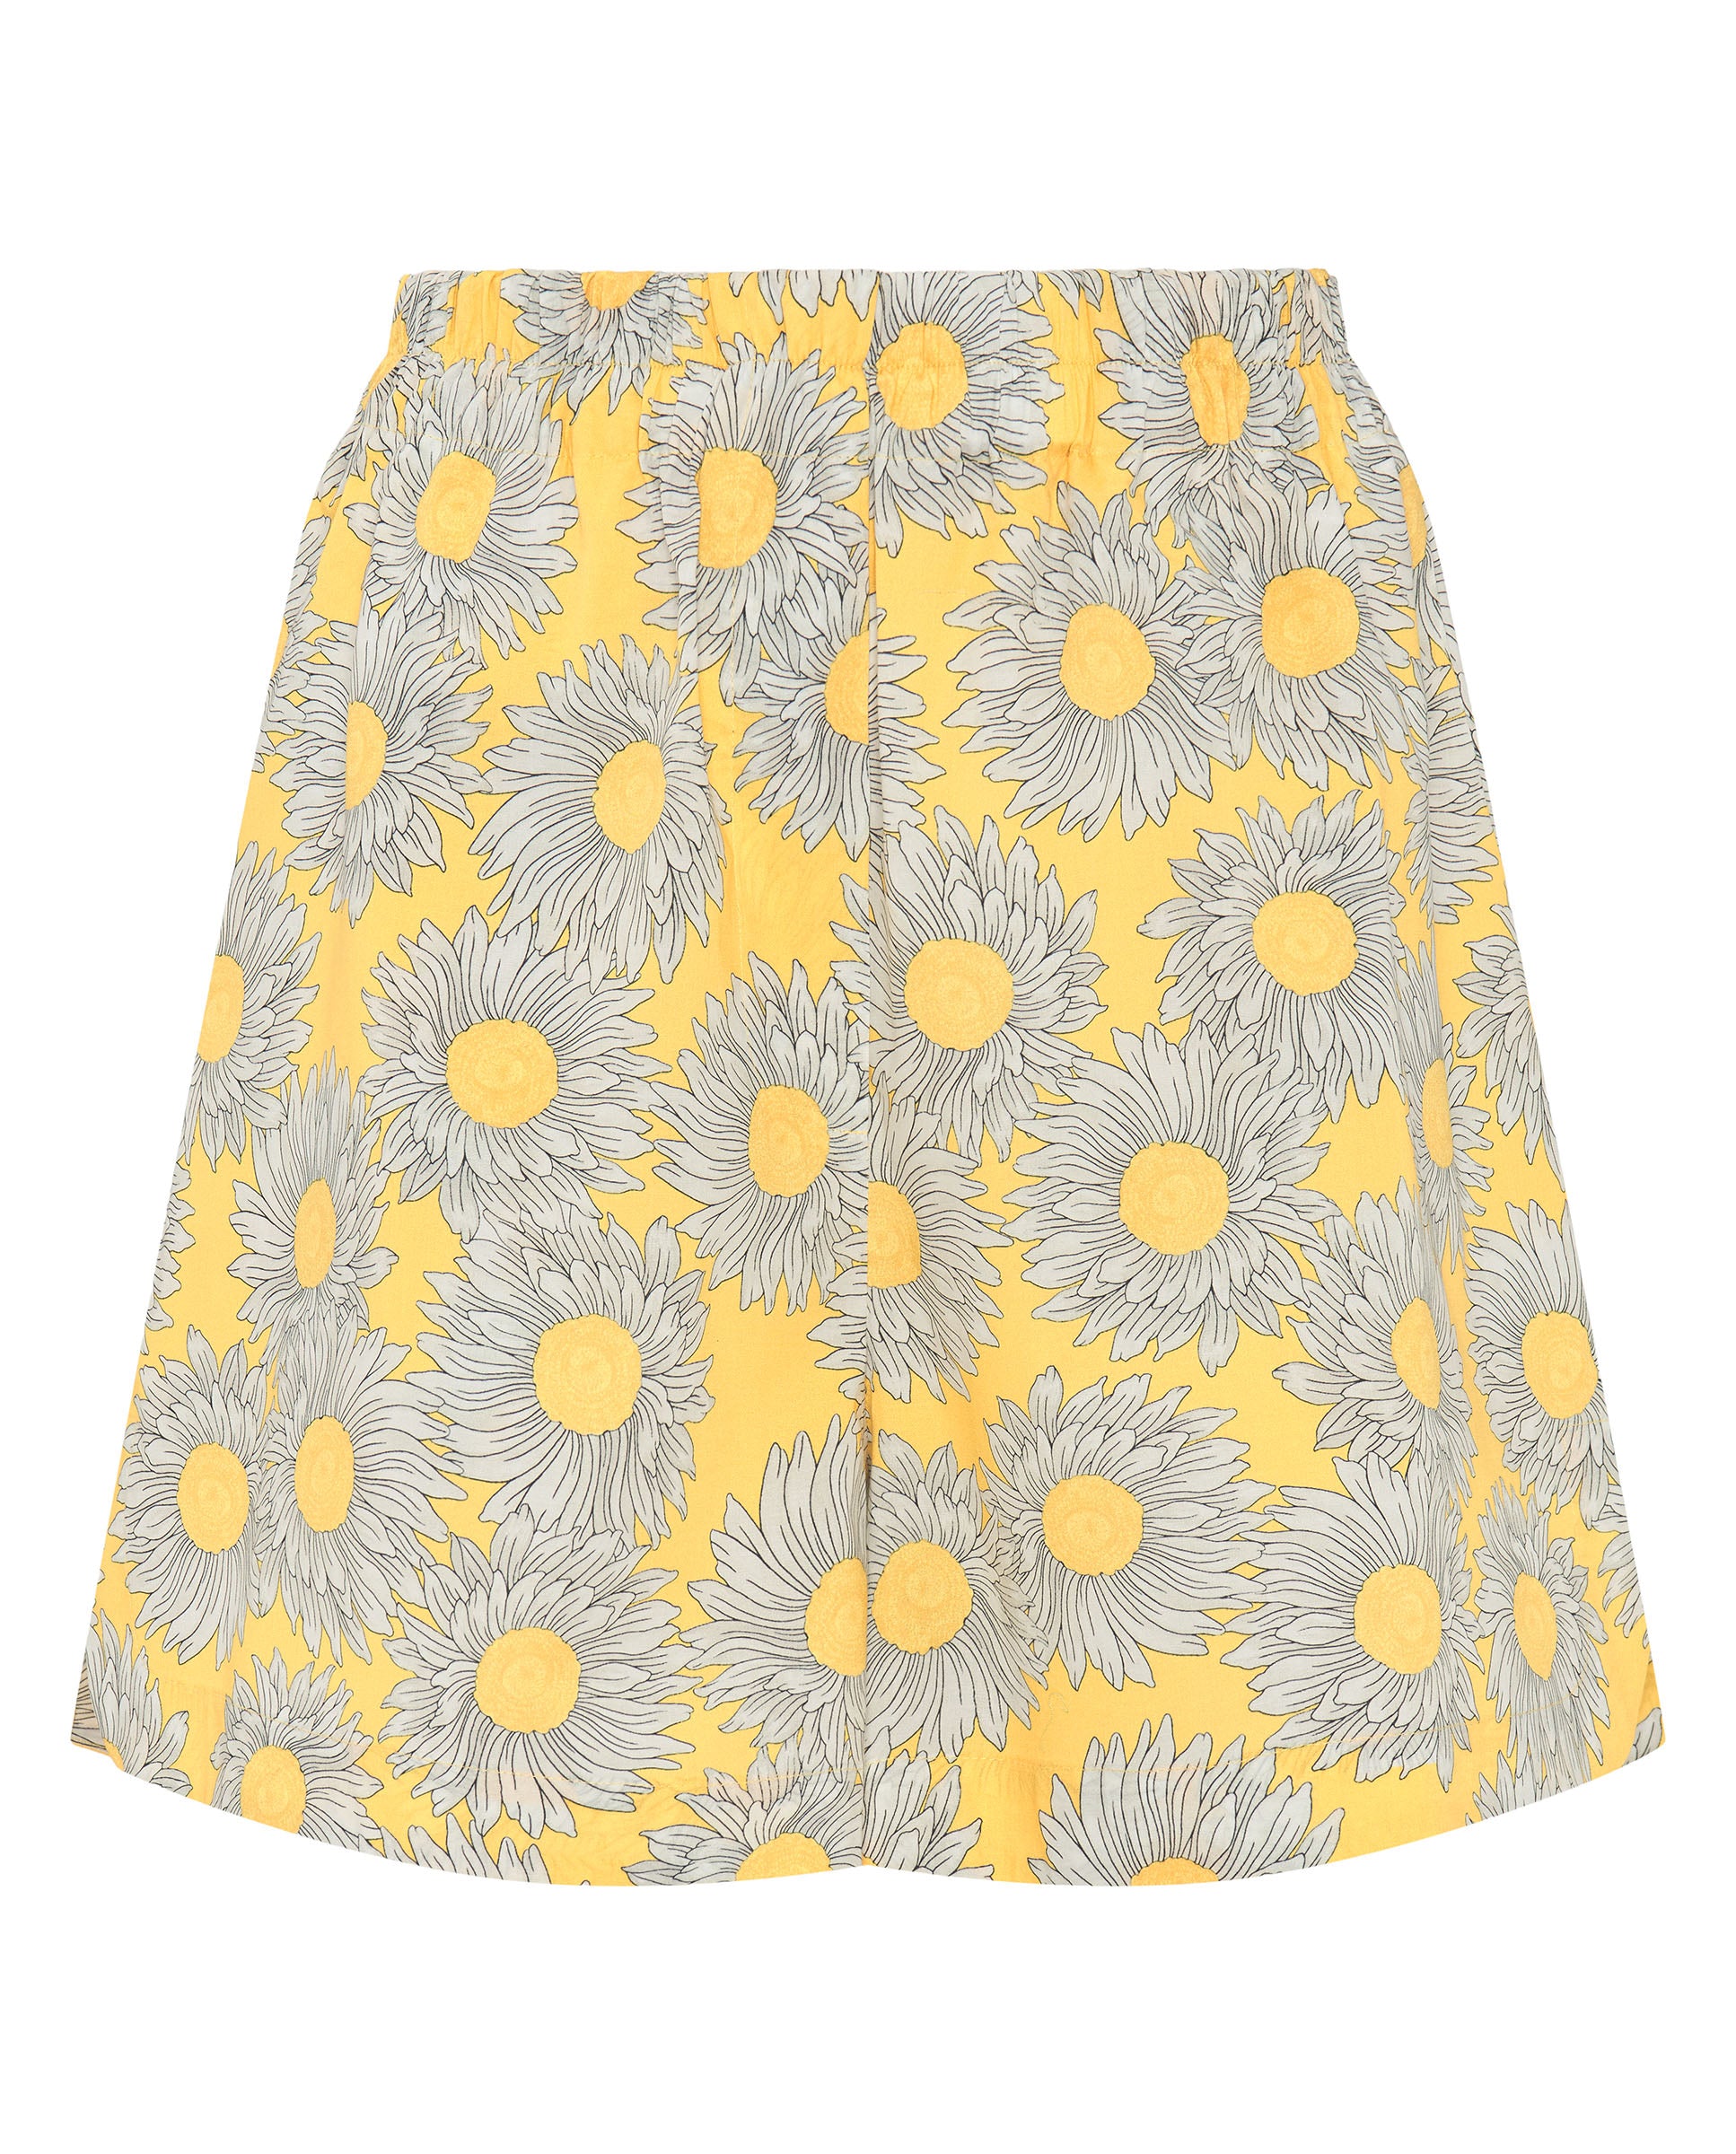 Yellow floral print cotton shorts by MIRTO